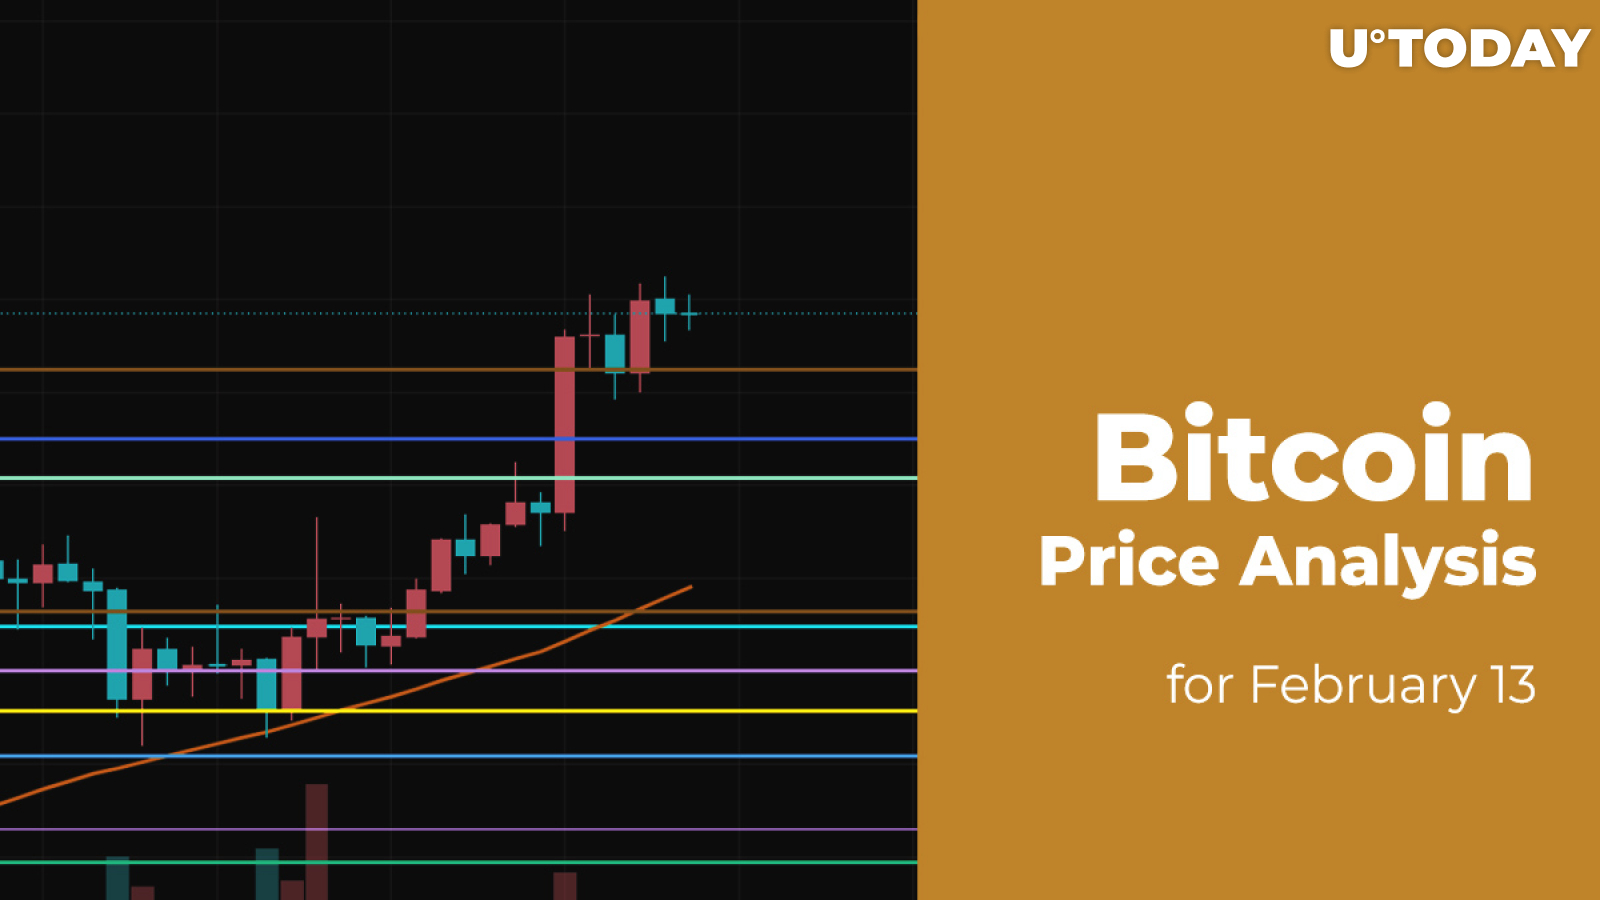 Bitcoin (BTC) Price Analysis for February 13